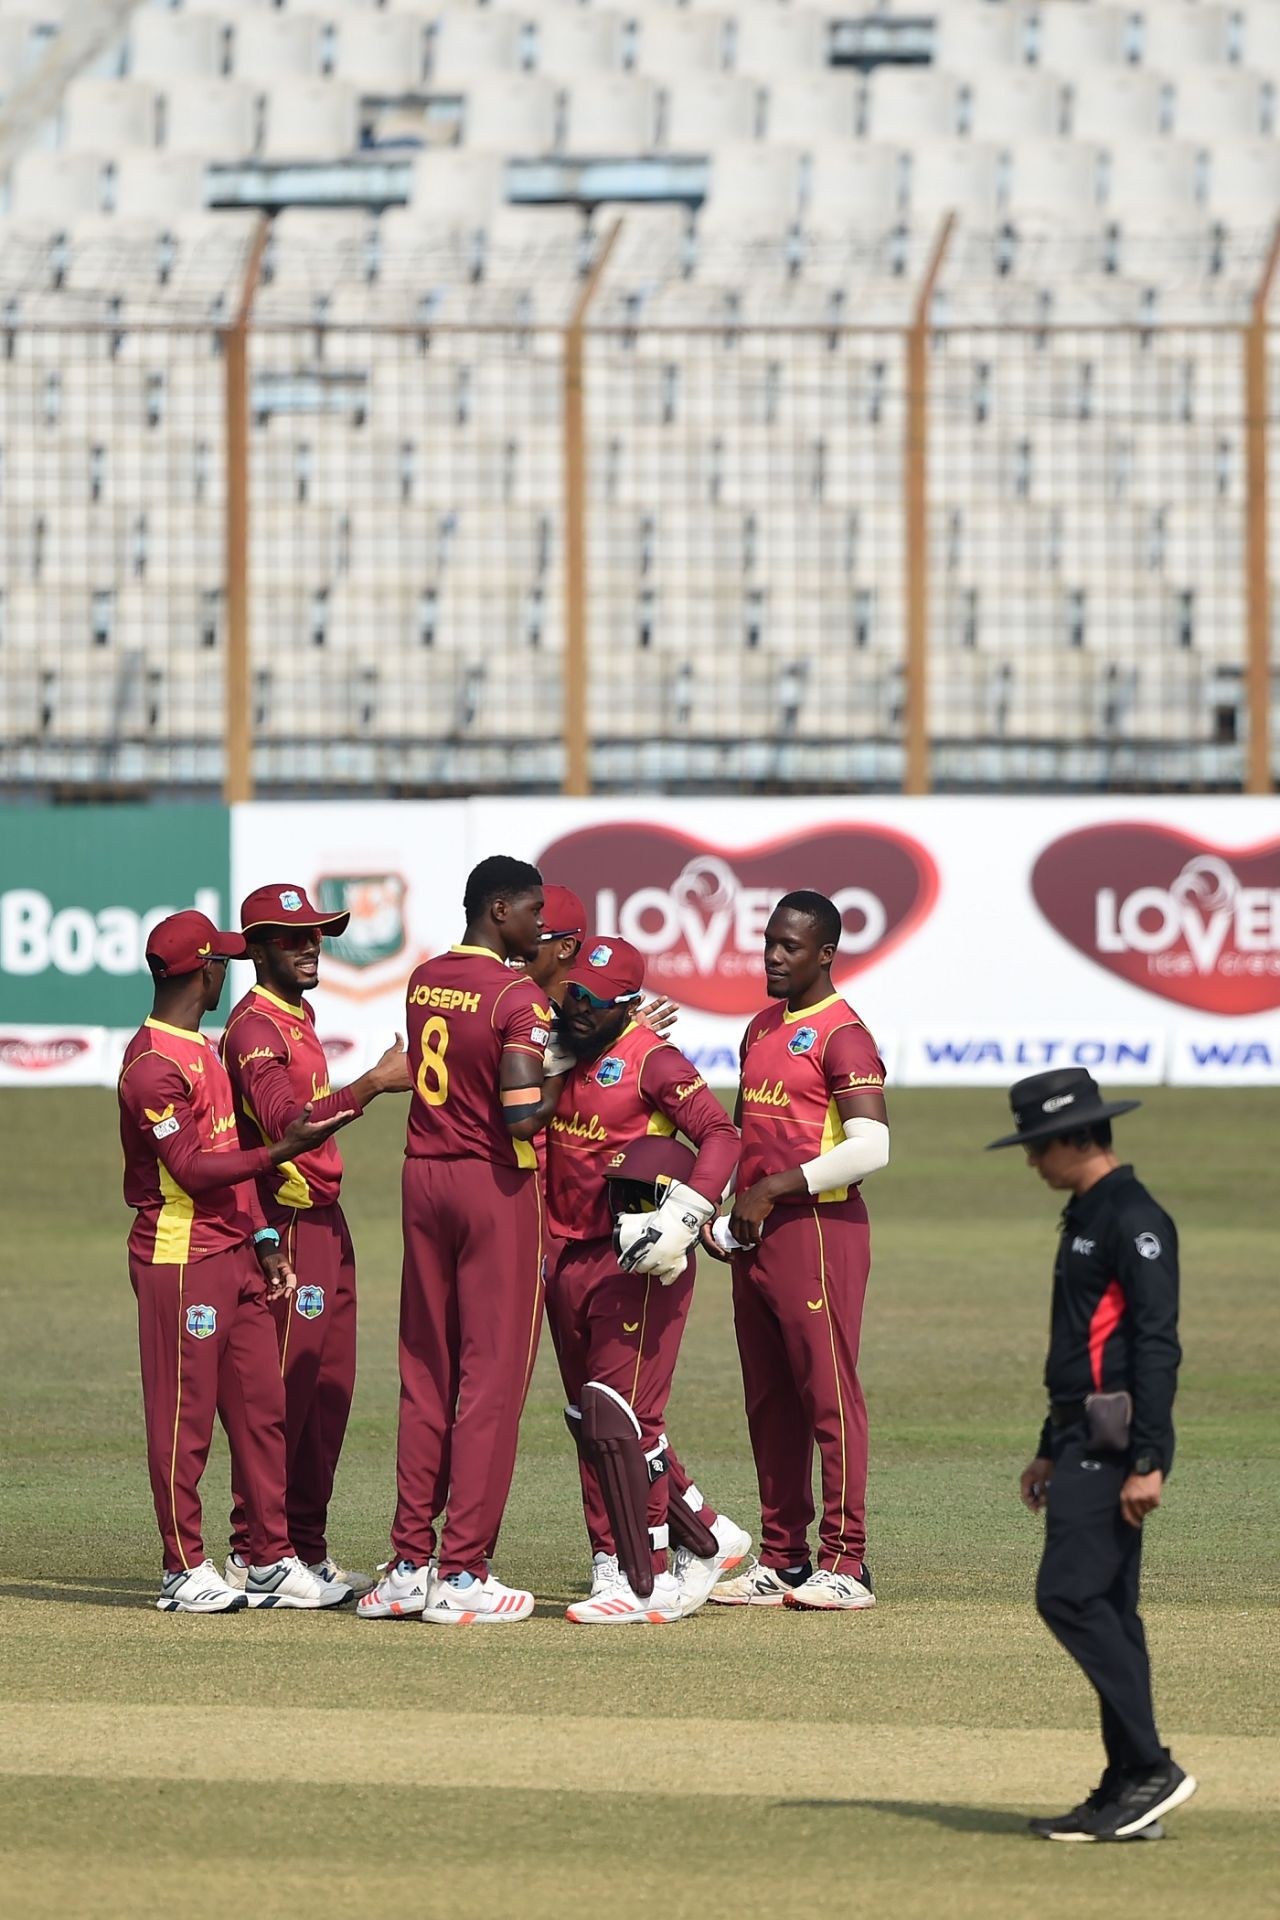 Alzarri Joseph celebrates the wicket of Tamim Iqbal with his team-mates, Bangladesh vs West Indies, 3rd ODI, Chattogram, January 25, 2020